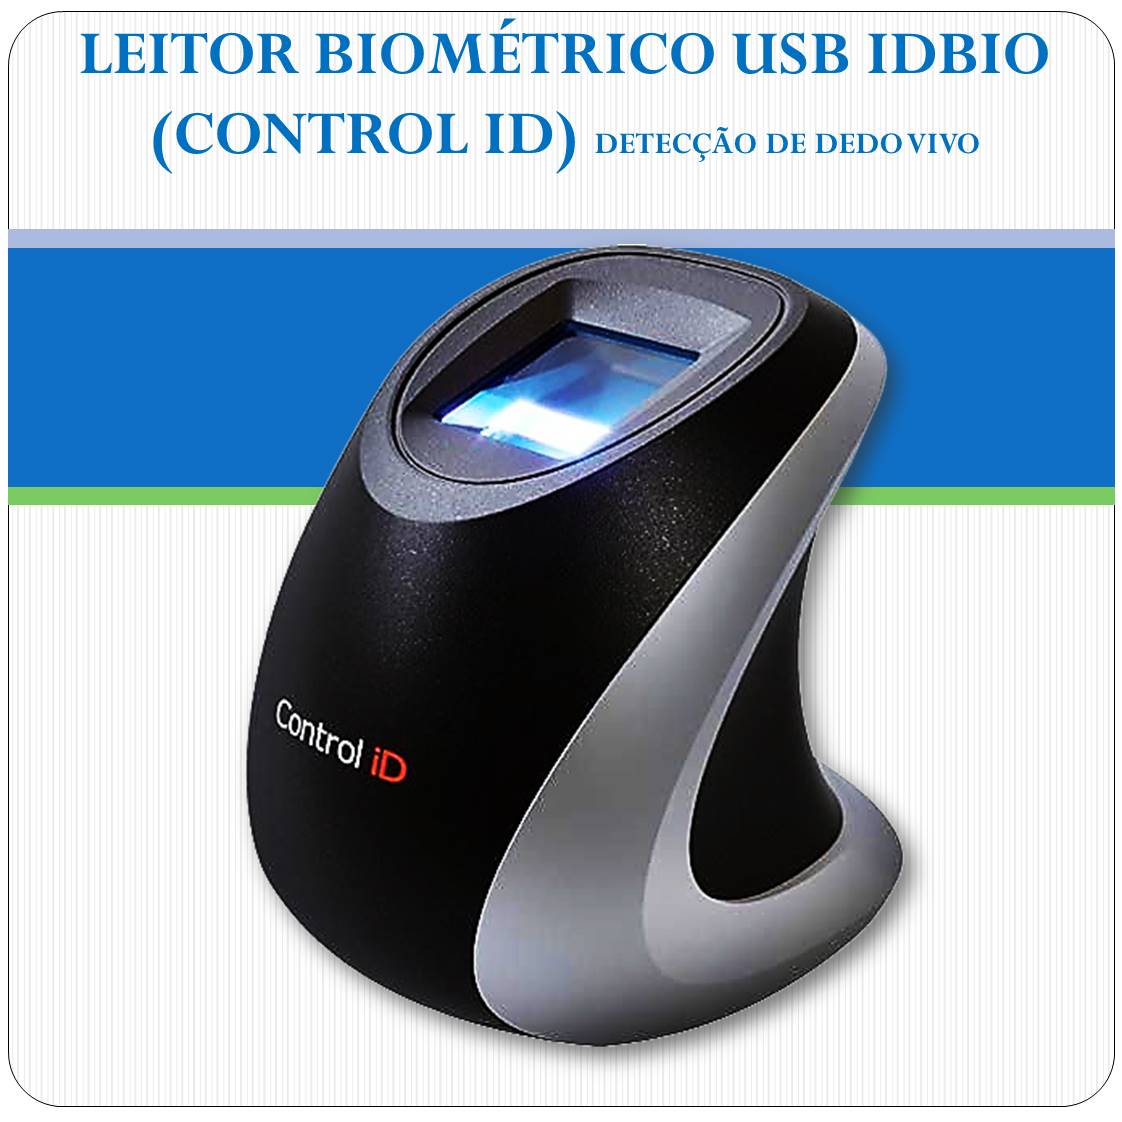 Leitor Biométrico USB - iDBio - Control ID